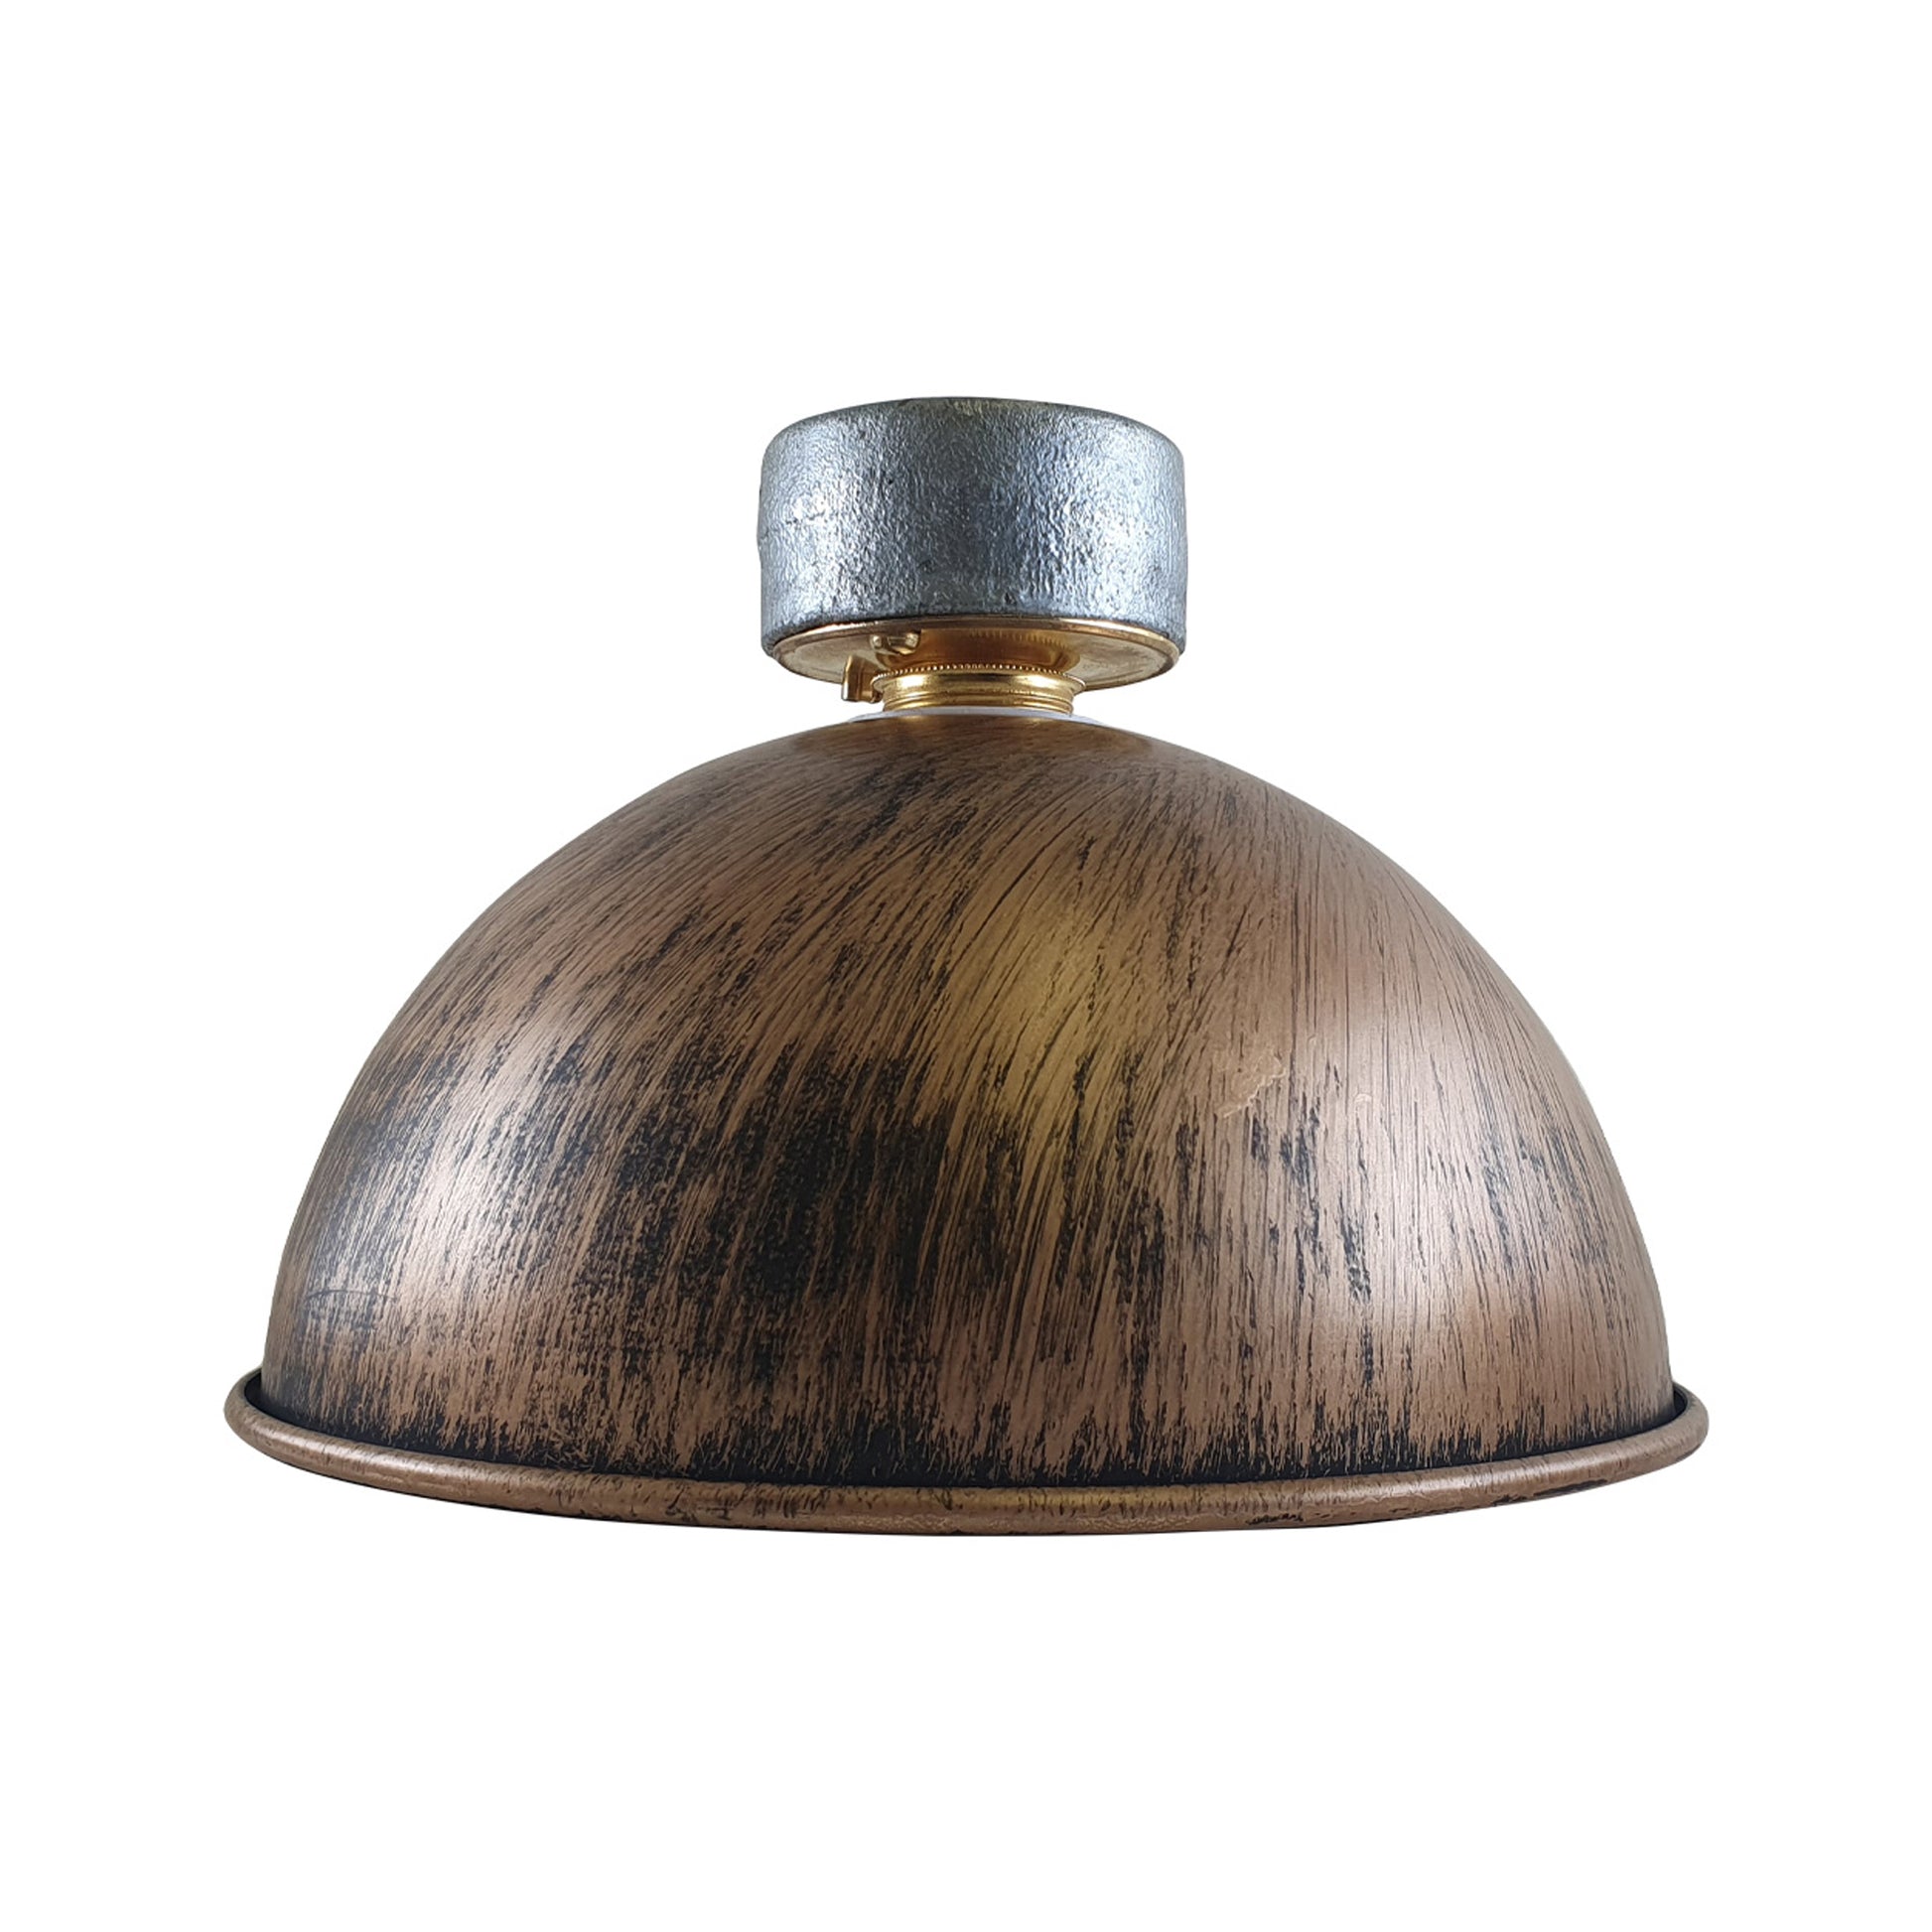 Brushed Copper Ceiling Light Lampshade Fitting Industrial Design B22 Lighting~1566 - LEDSone UK Ltd